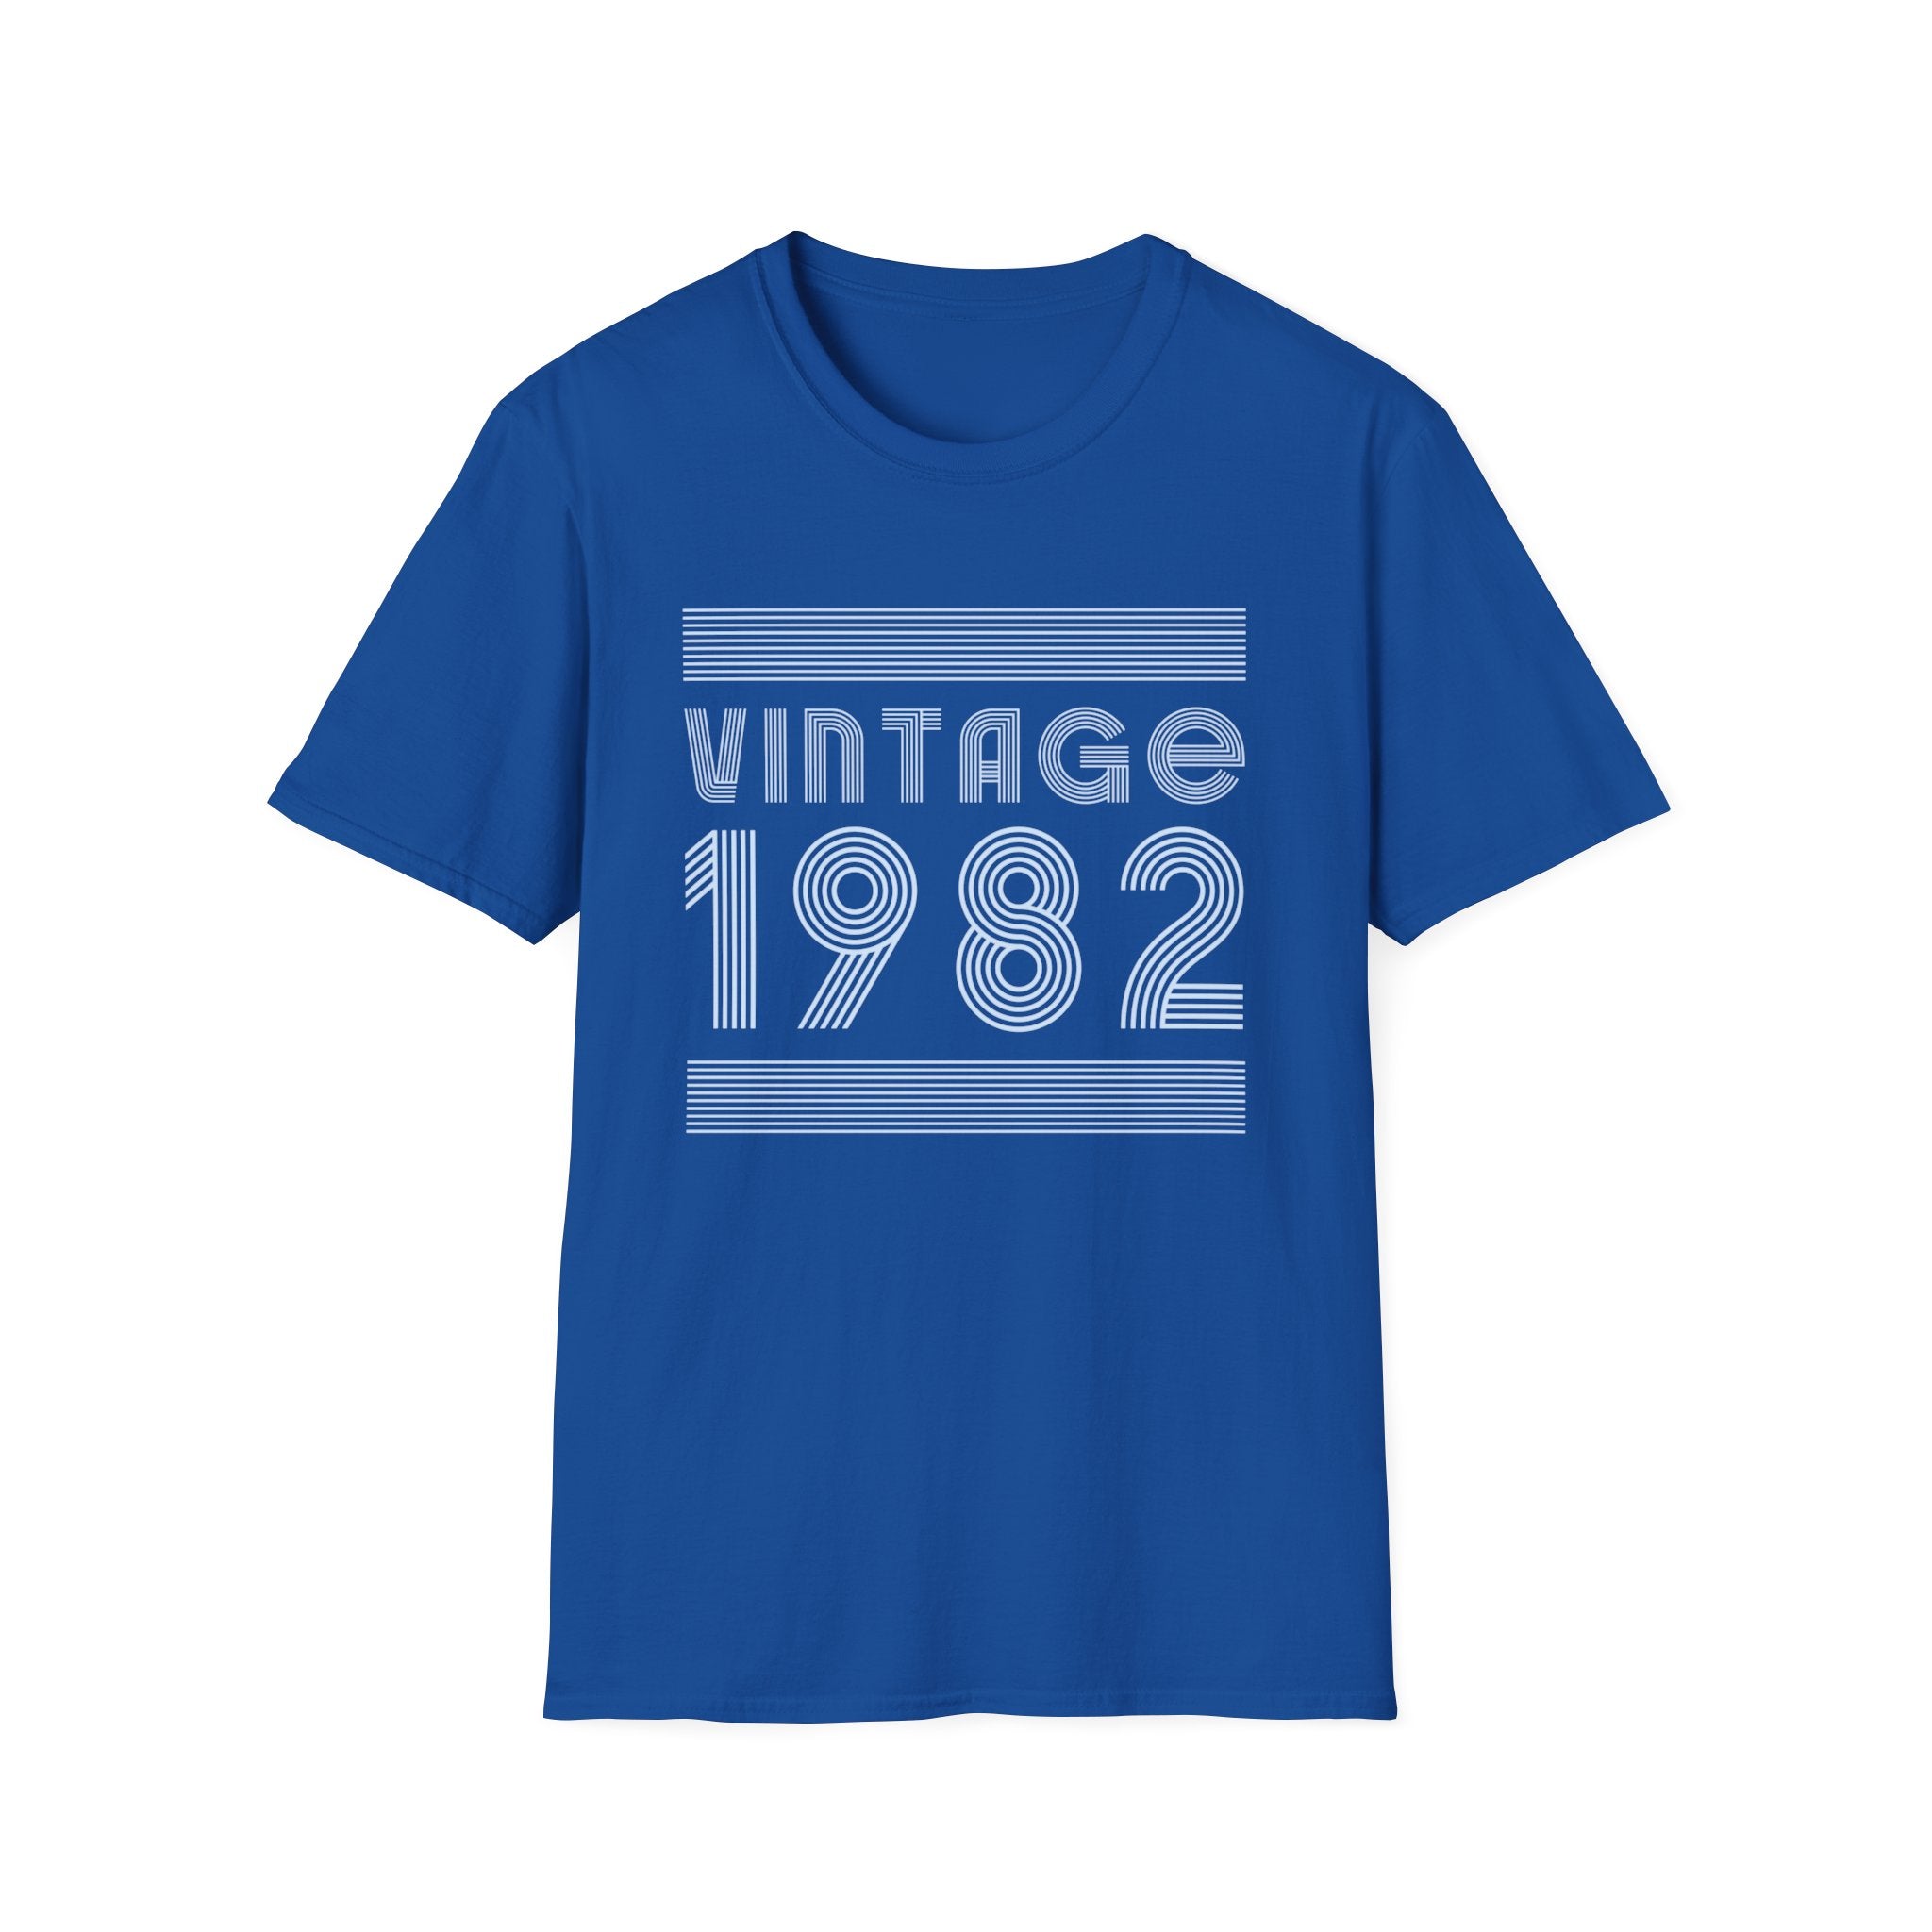 Vintage 1982 T Shirts for Men Retro Funny 1982 Birthday Mens Shirts